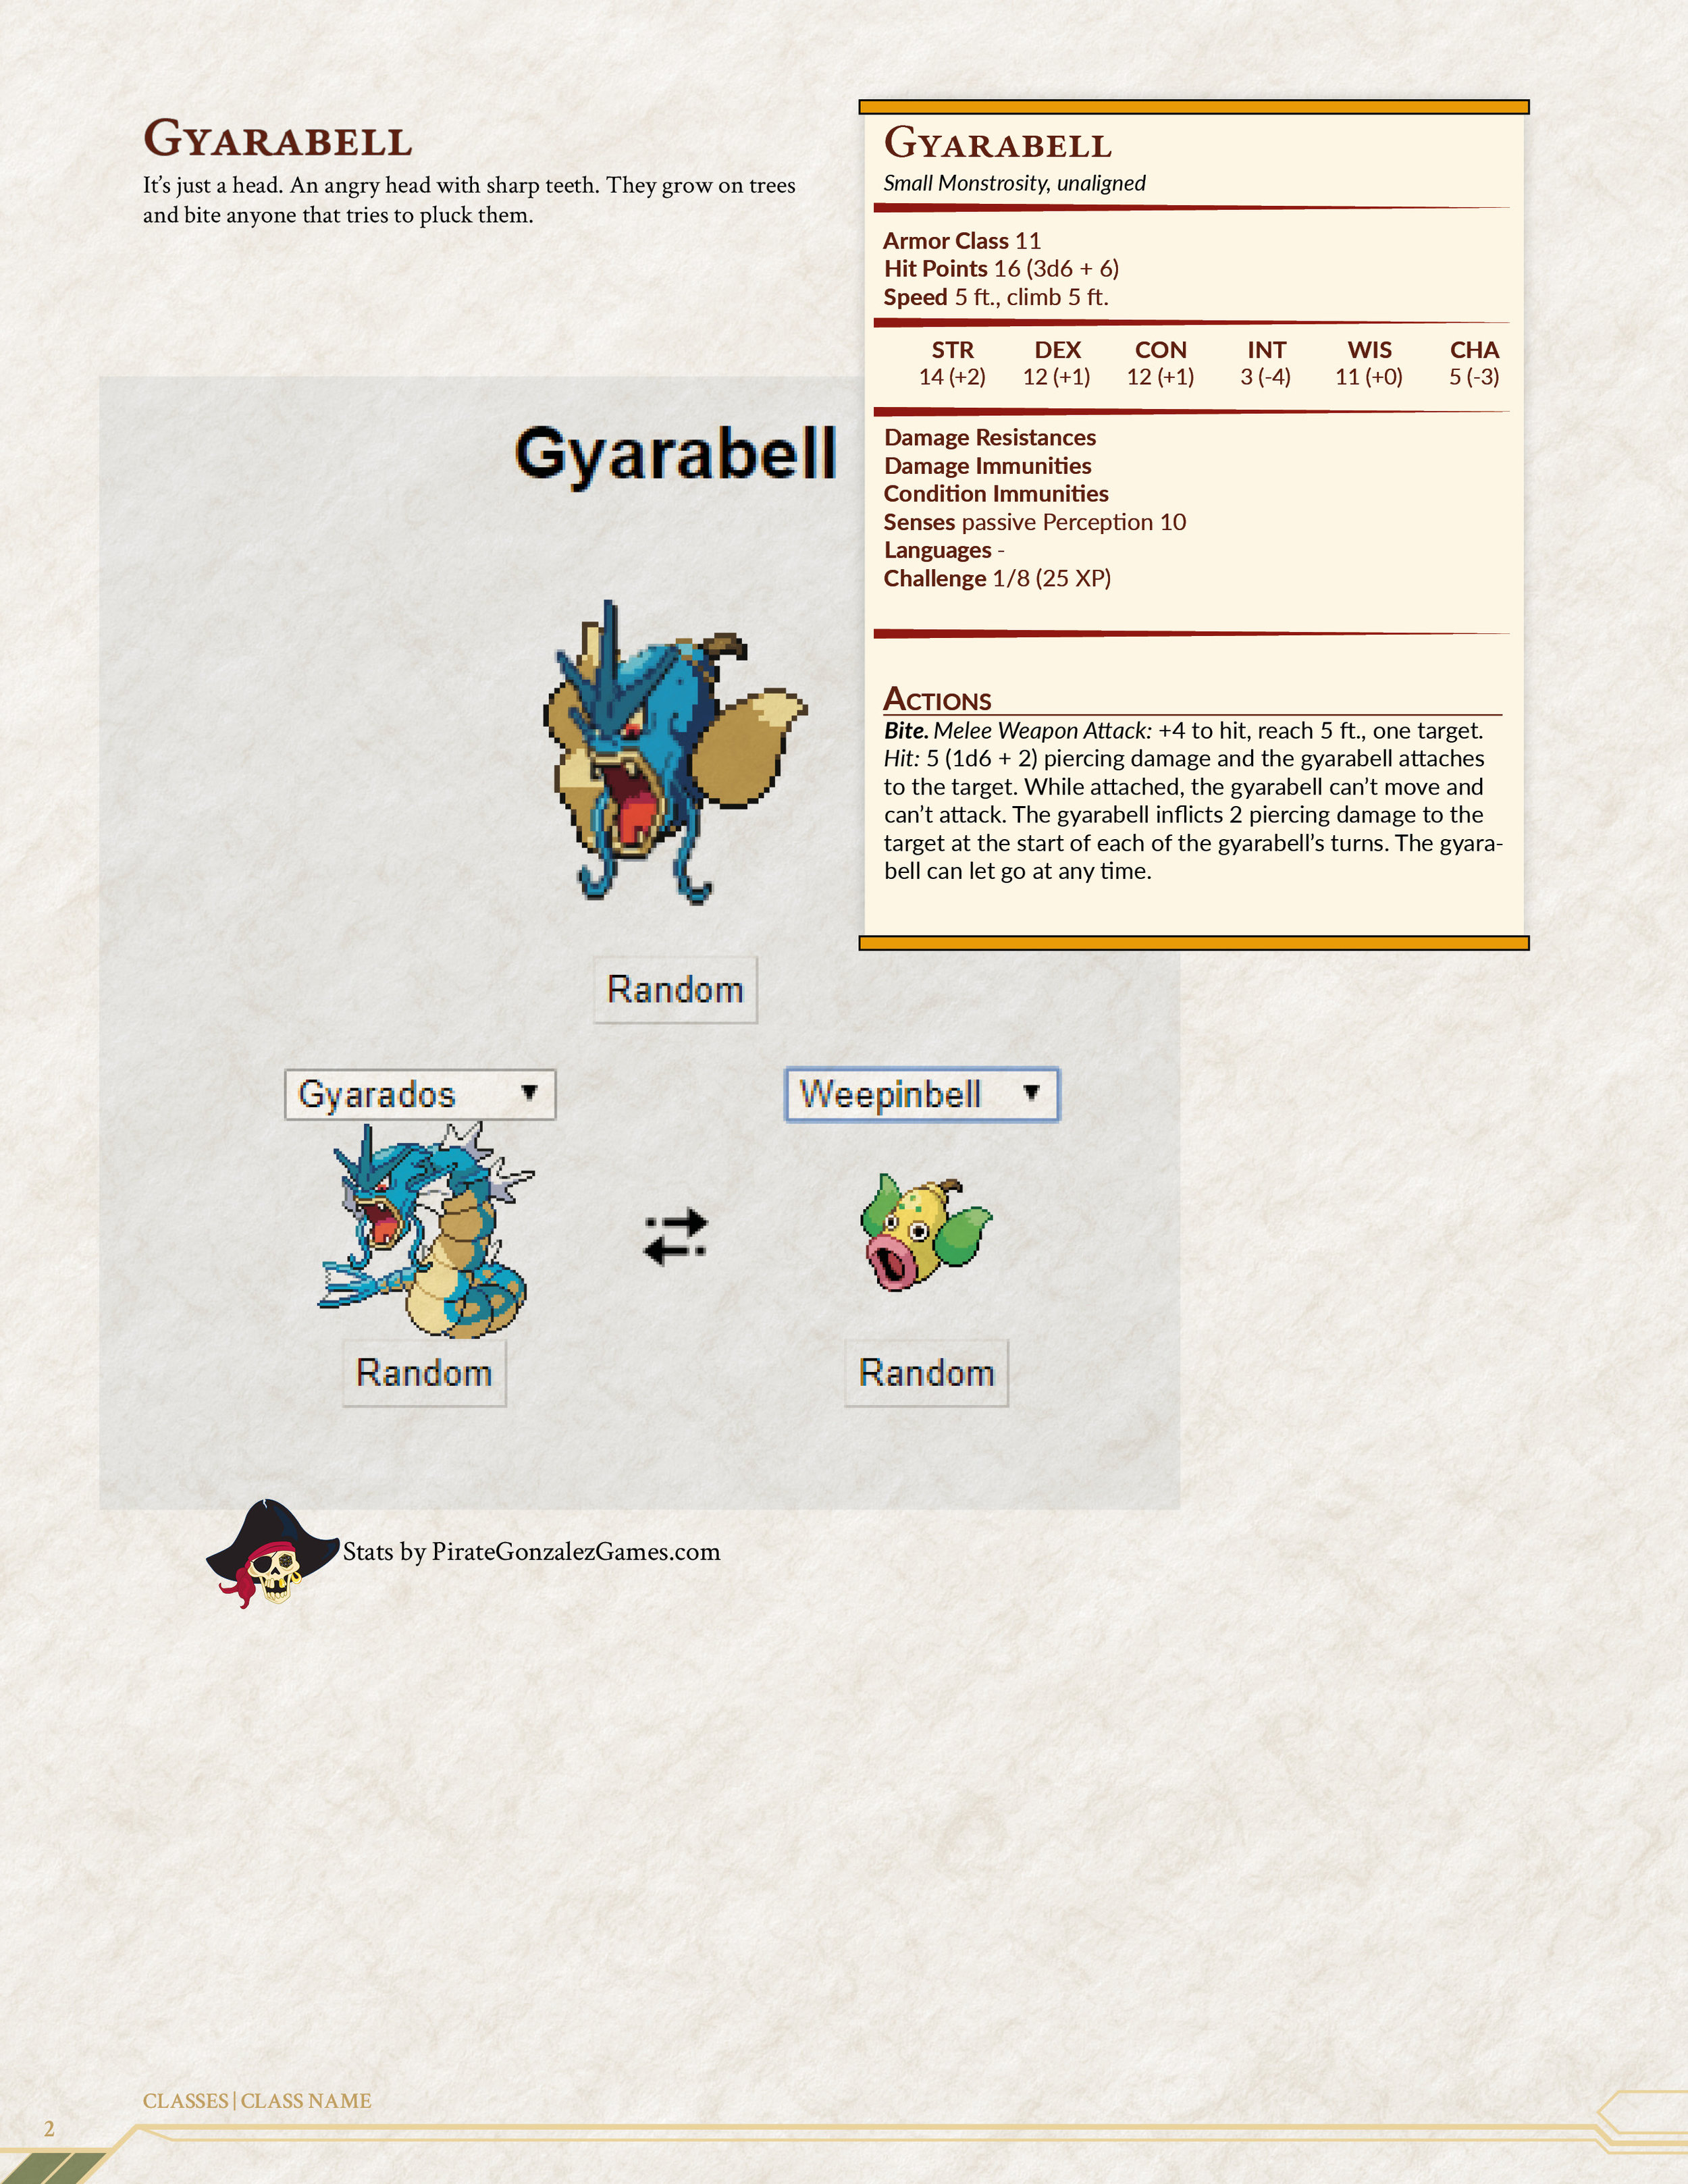 Pokemon Fusion: Gyarabell Gonzalez Games